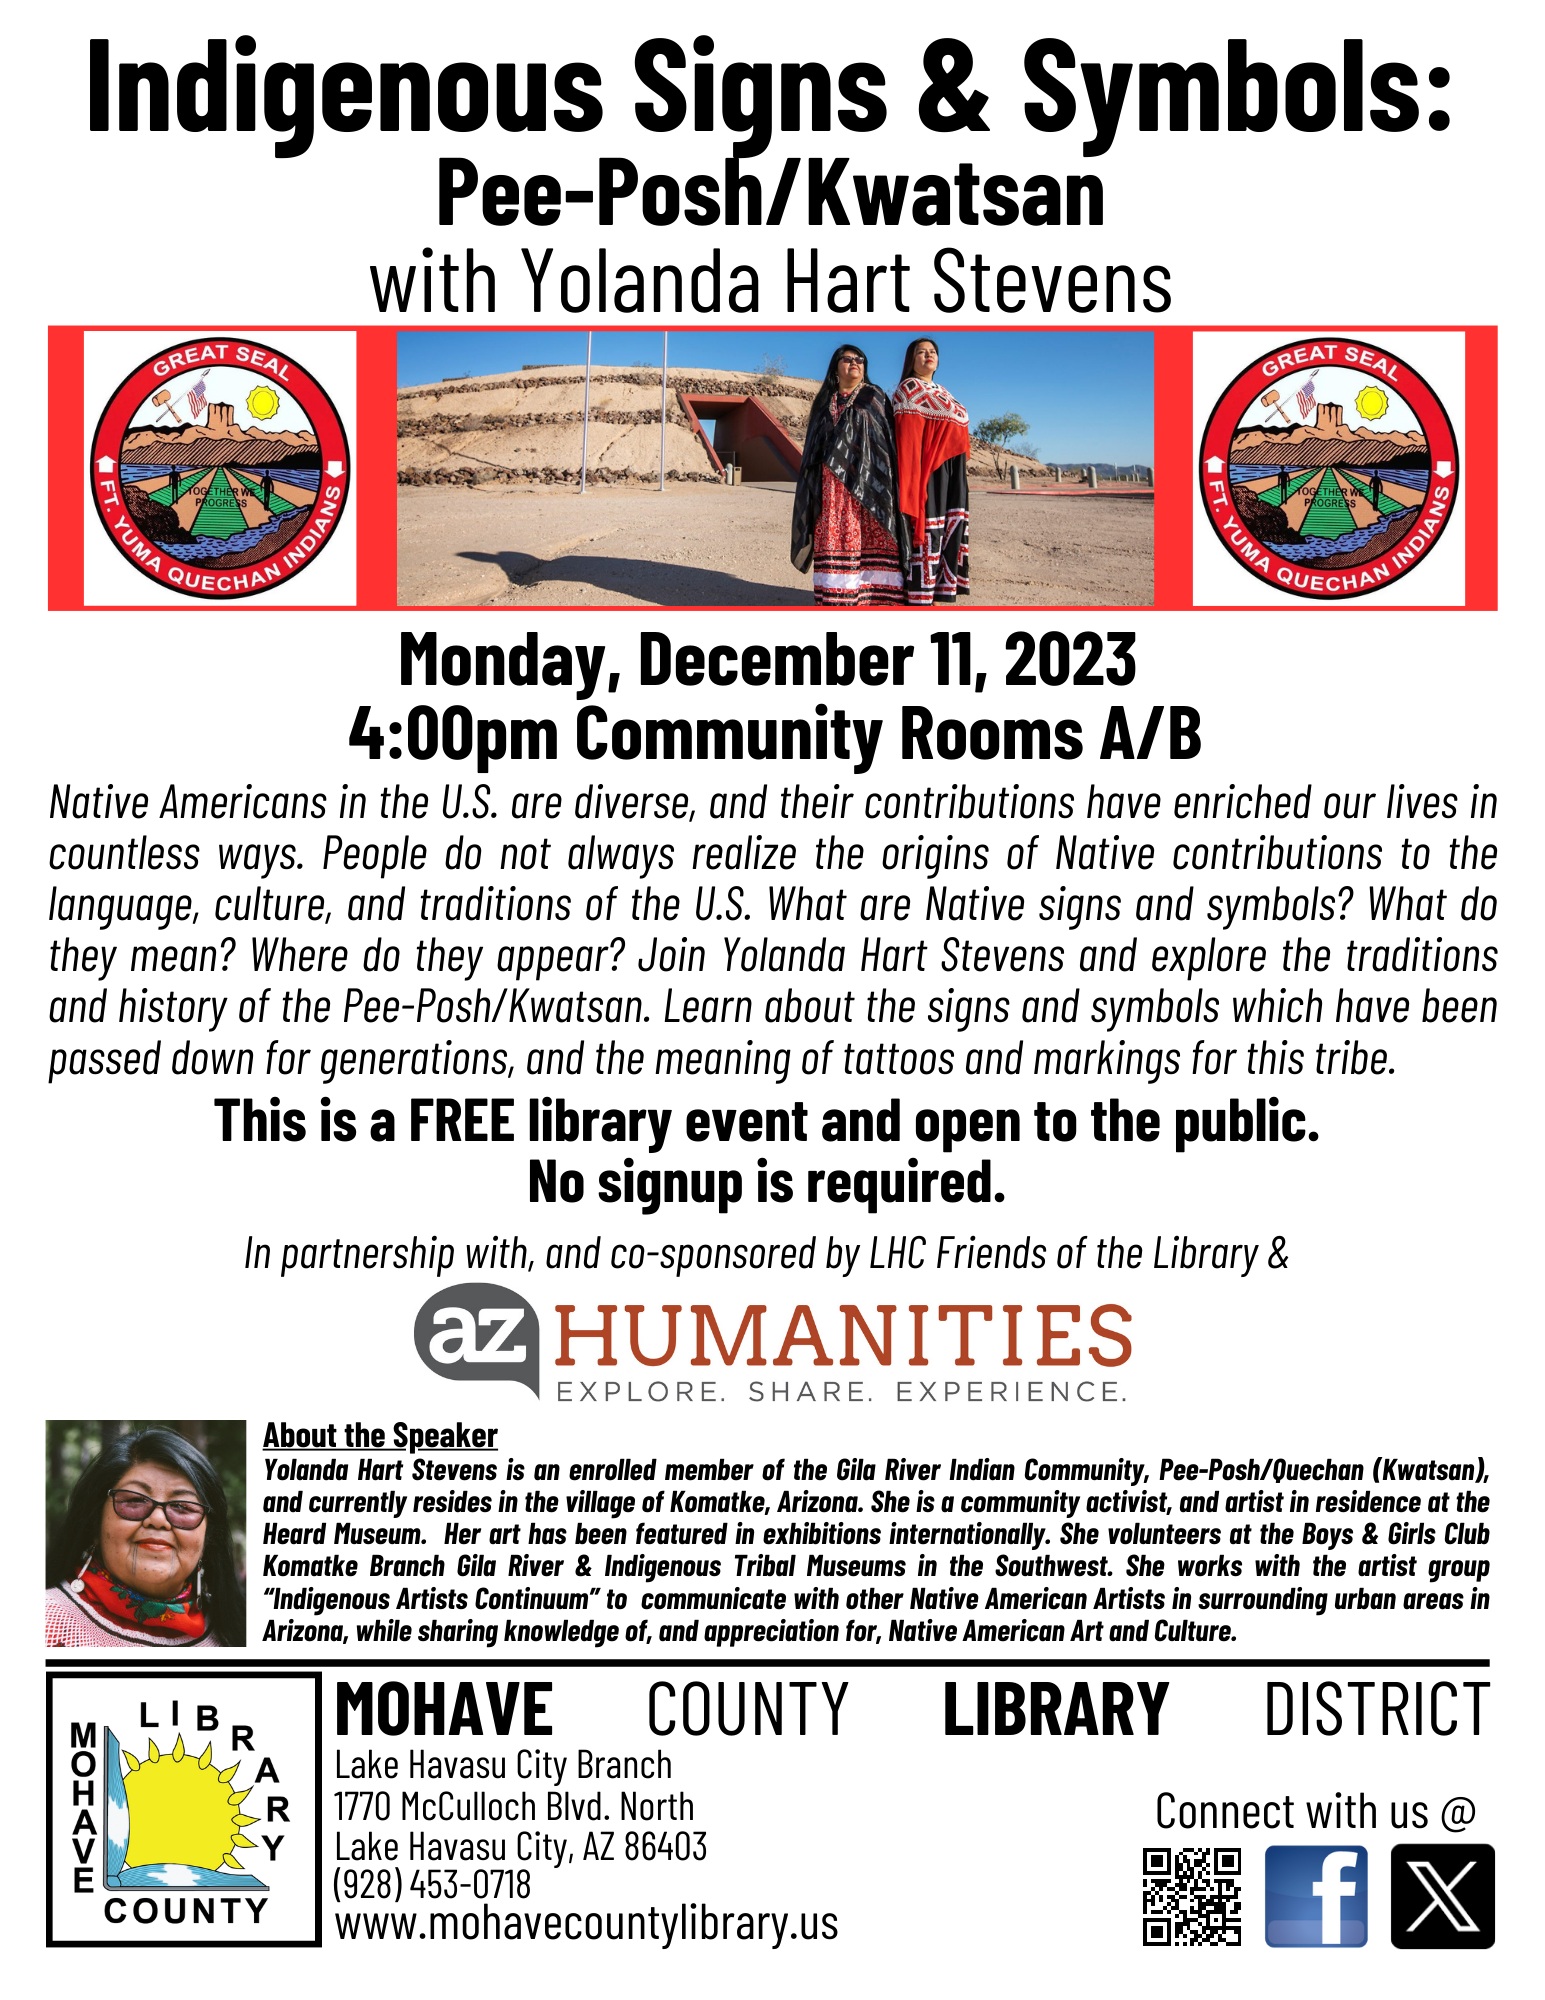 AZ Humanities: Indigenous Signs and Symbols with Yolanda Hart Stevens